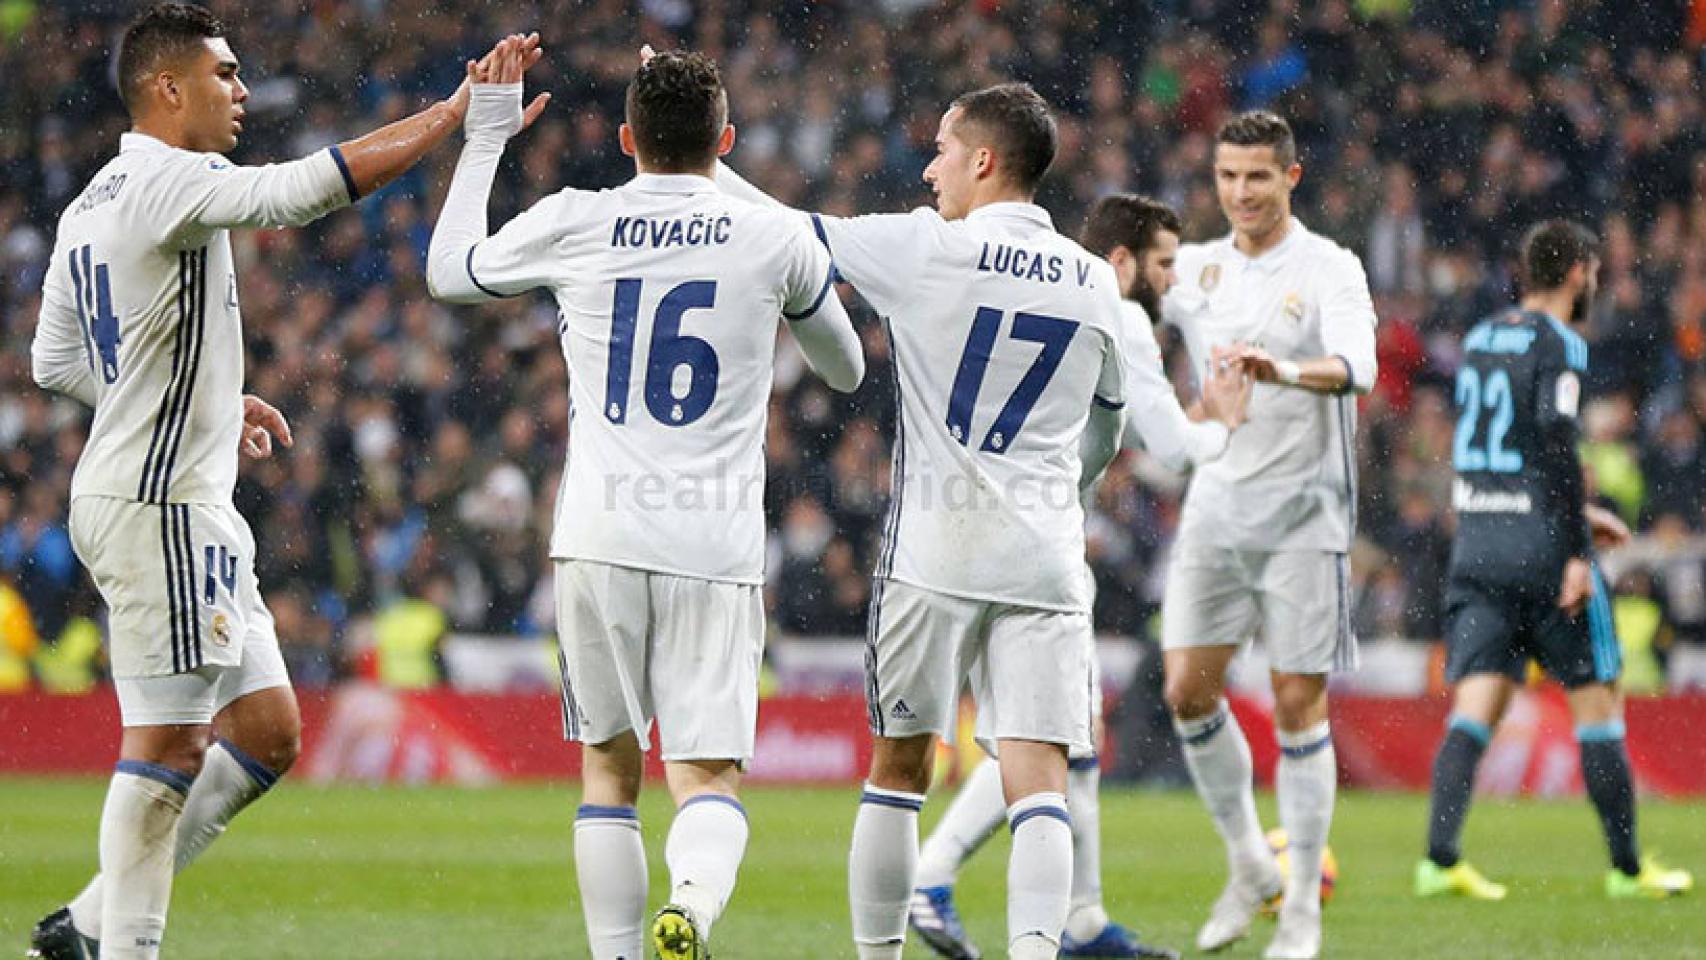 Mateo Kovacic, Lucas Vázquez y Casemiro celebran un gol